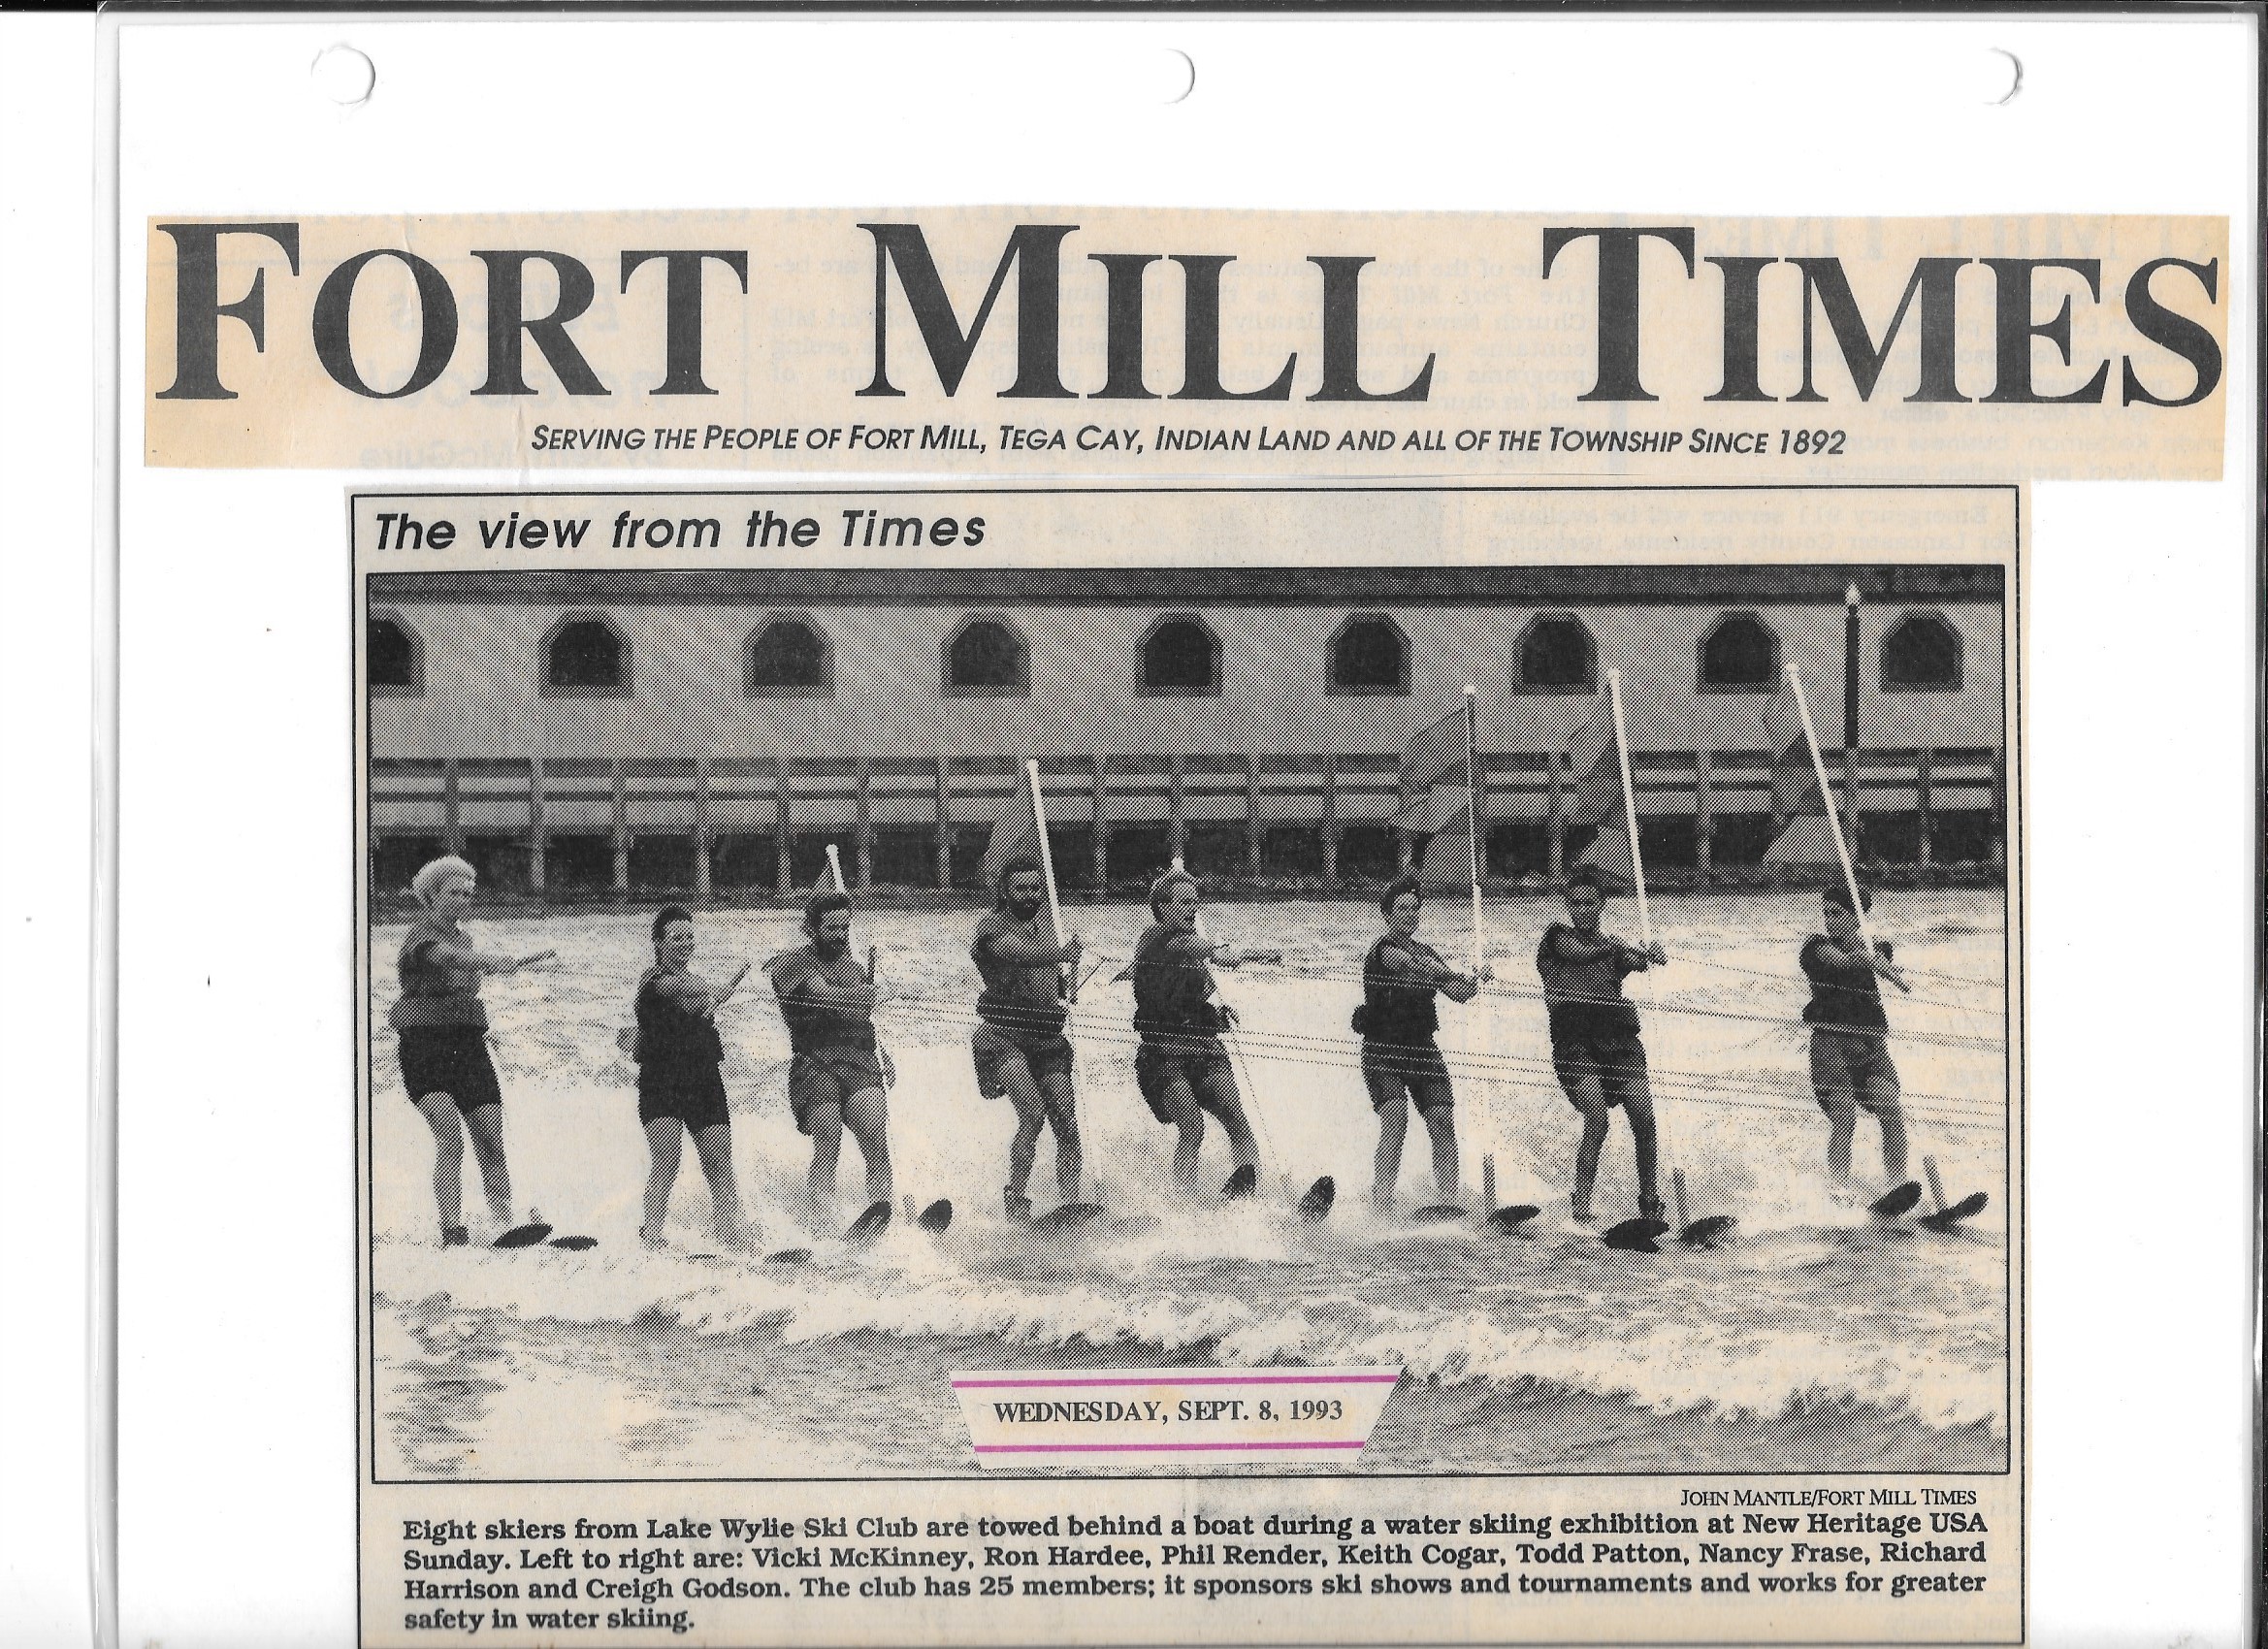 Fort Mill Times 1993 Flag Line.jpg